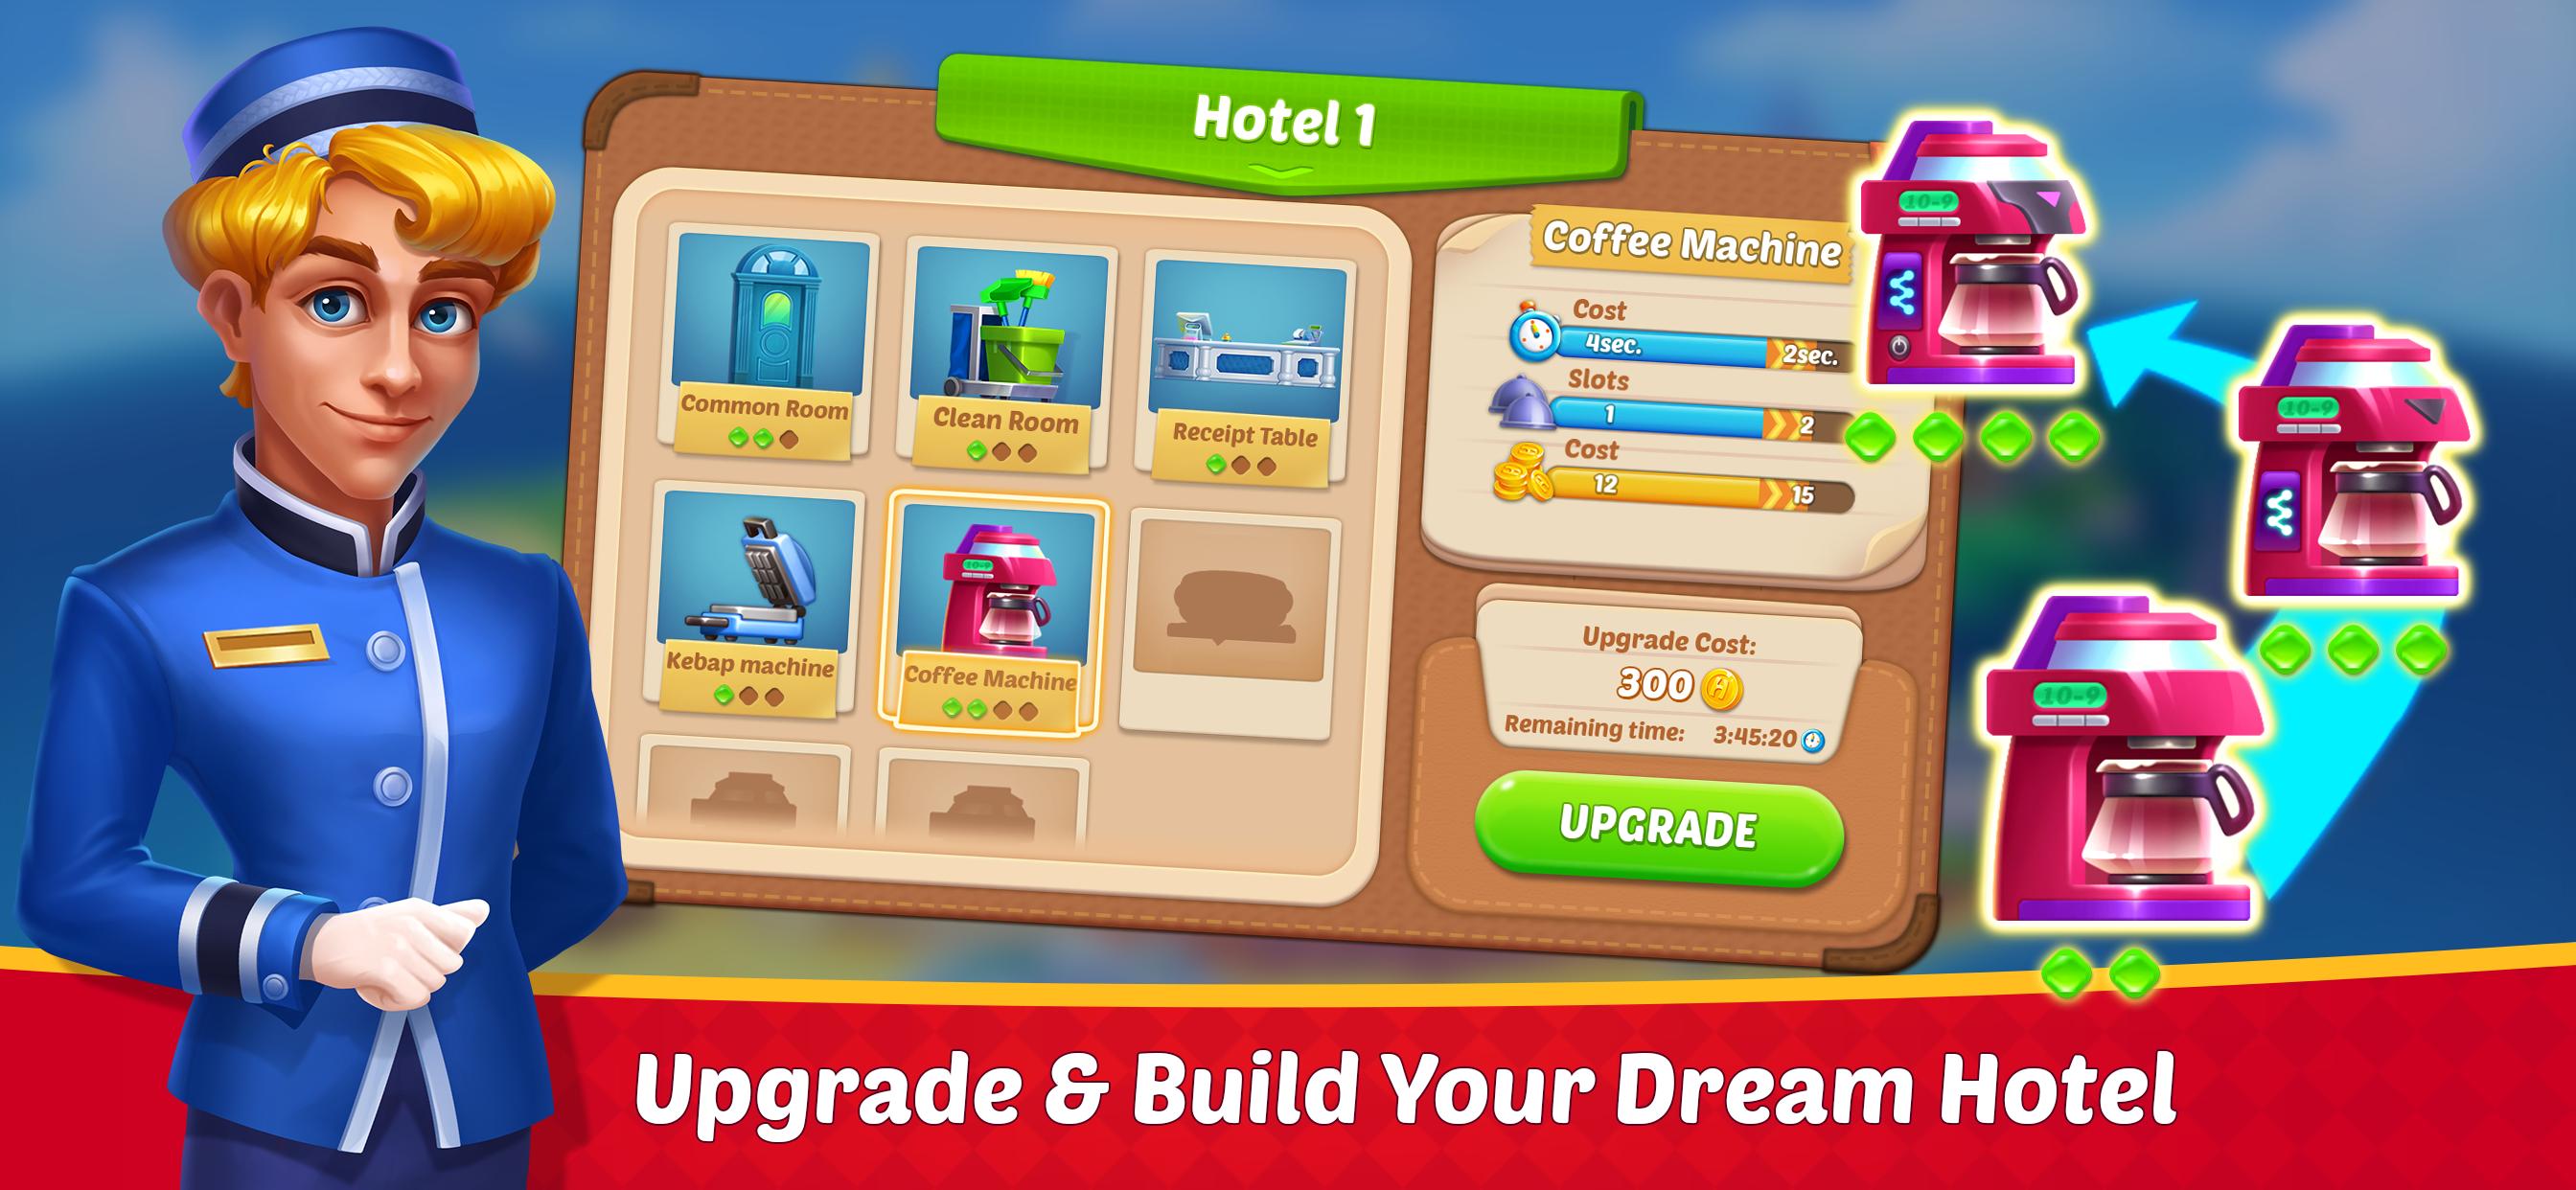 Dream Hotel Hotel Manager Simulation games 1.2.4 Screenshot 10